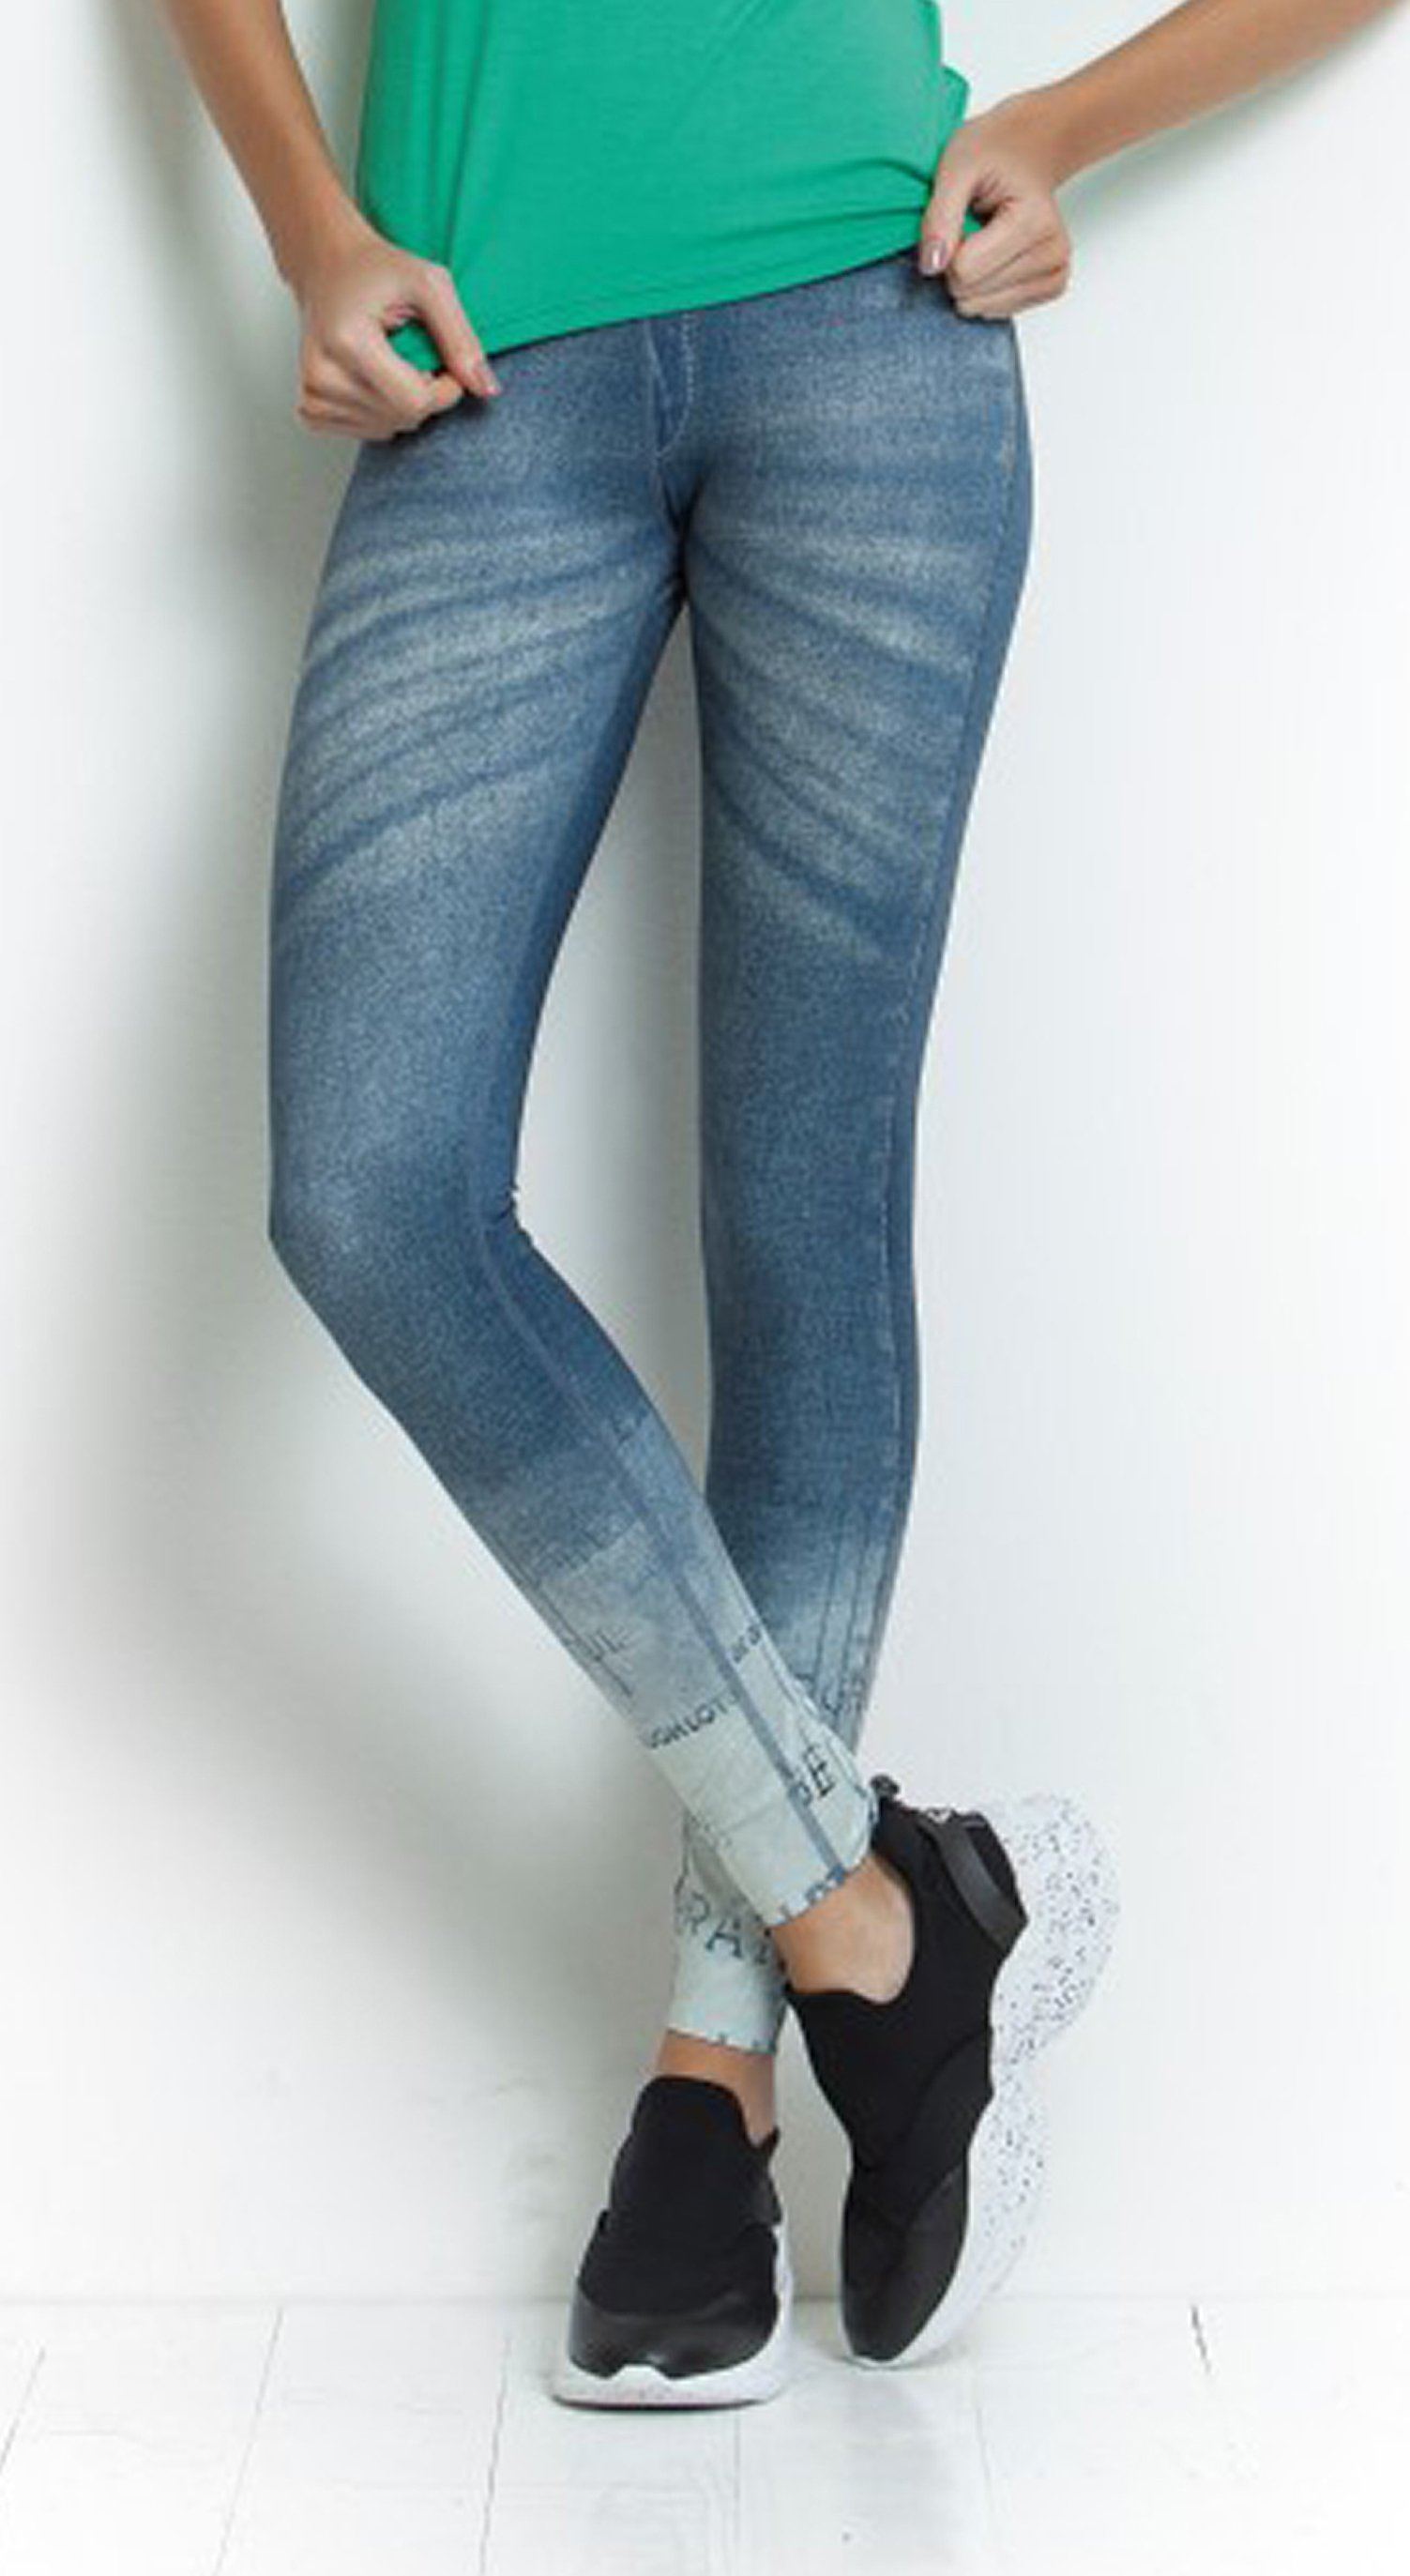 kaufe jetzt! Brazilian Fake Jeans Legging | Top Sublime Reversible | Shop Print Rio Grateful